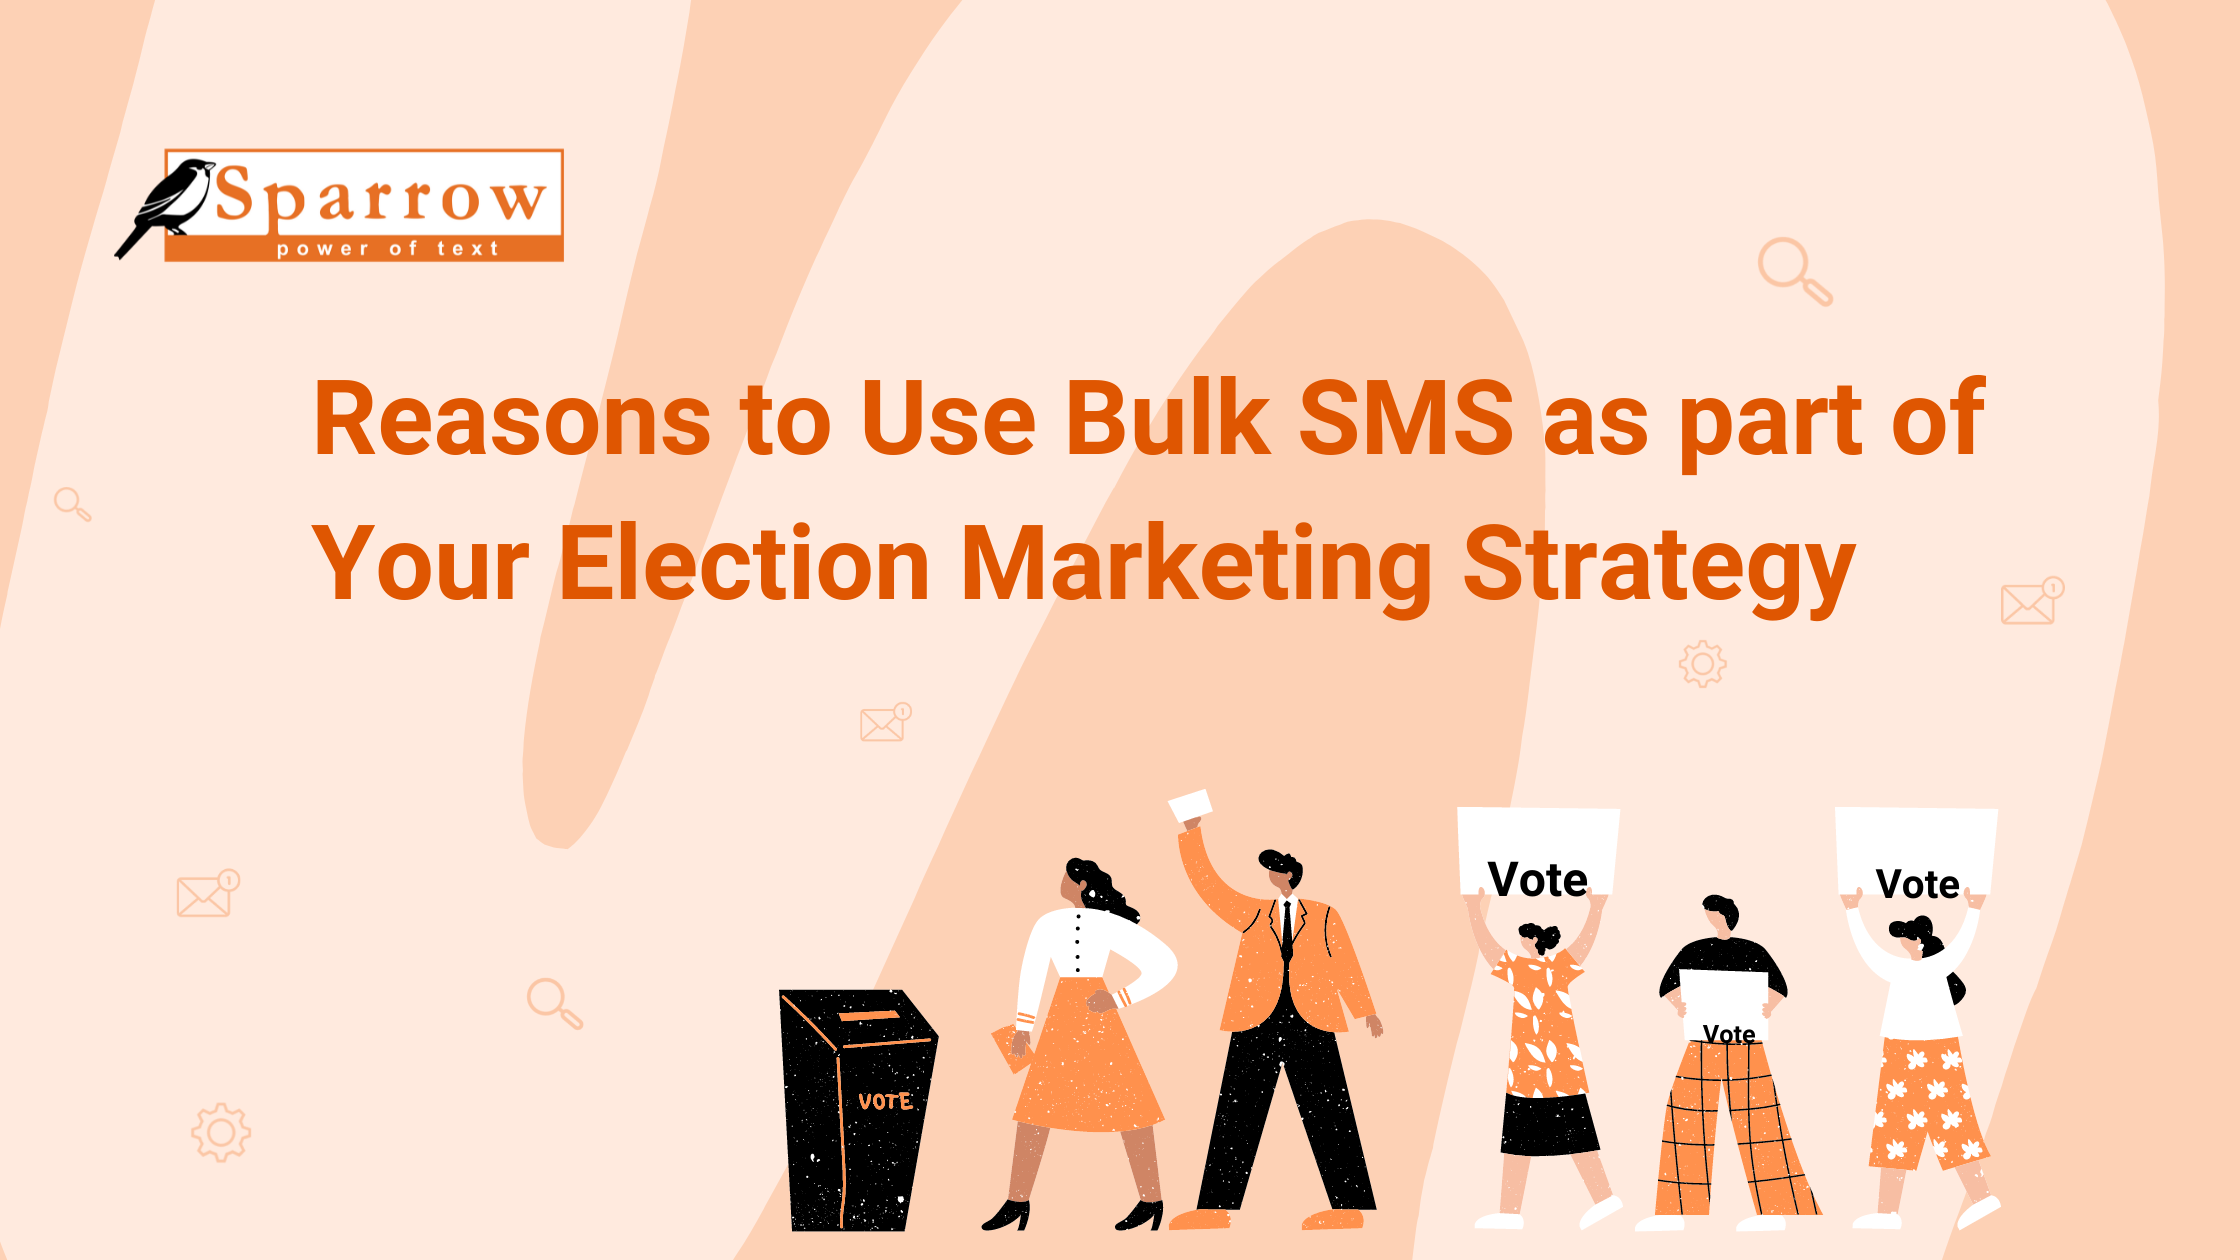 Sparrow SMS_Bulk SMS for Election